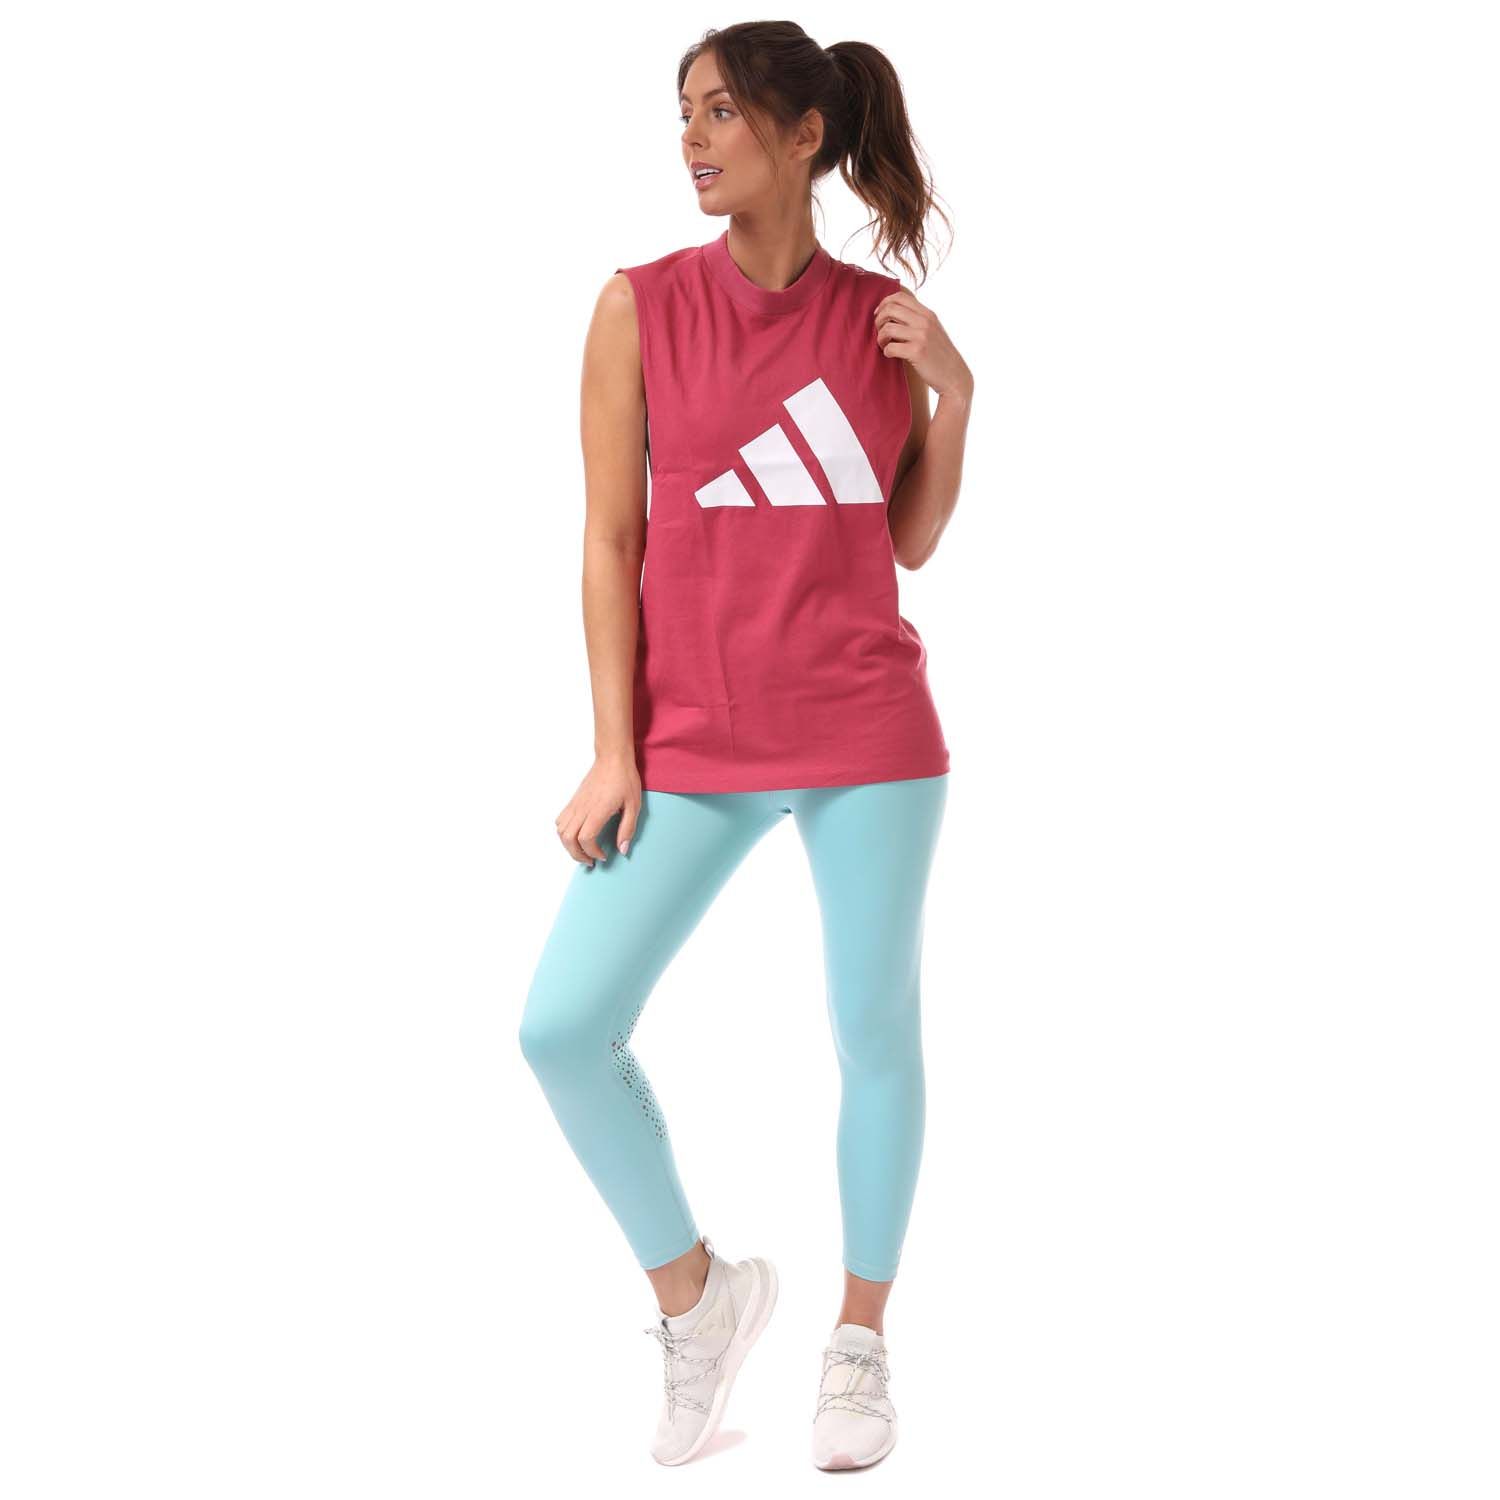 Buy Adidas Women Tf Summer Tight Blue Training Tights Online at